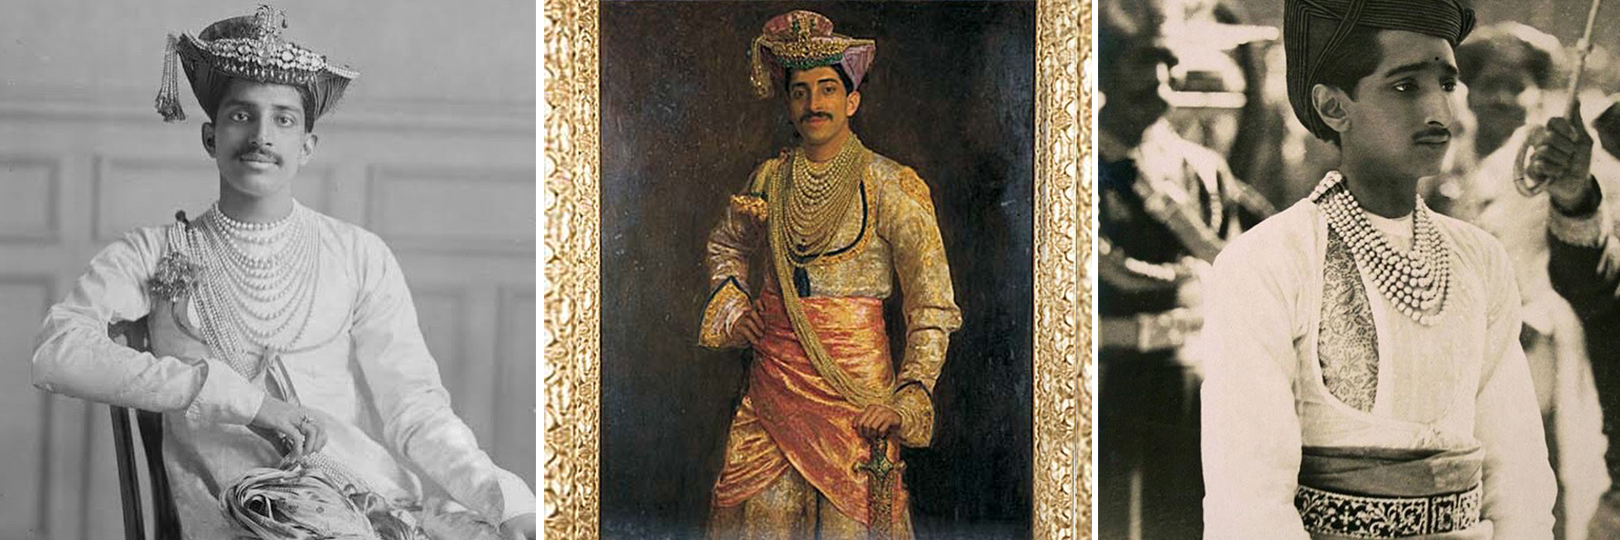 Maharajas of Indore | The Diamond Talk